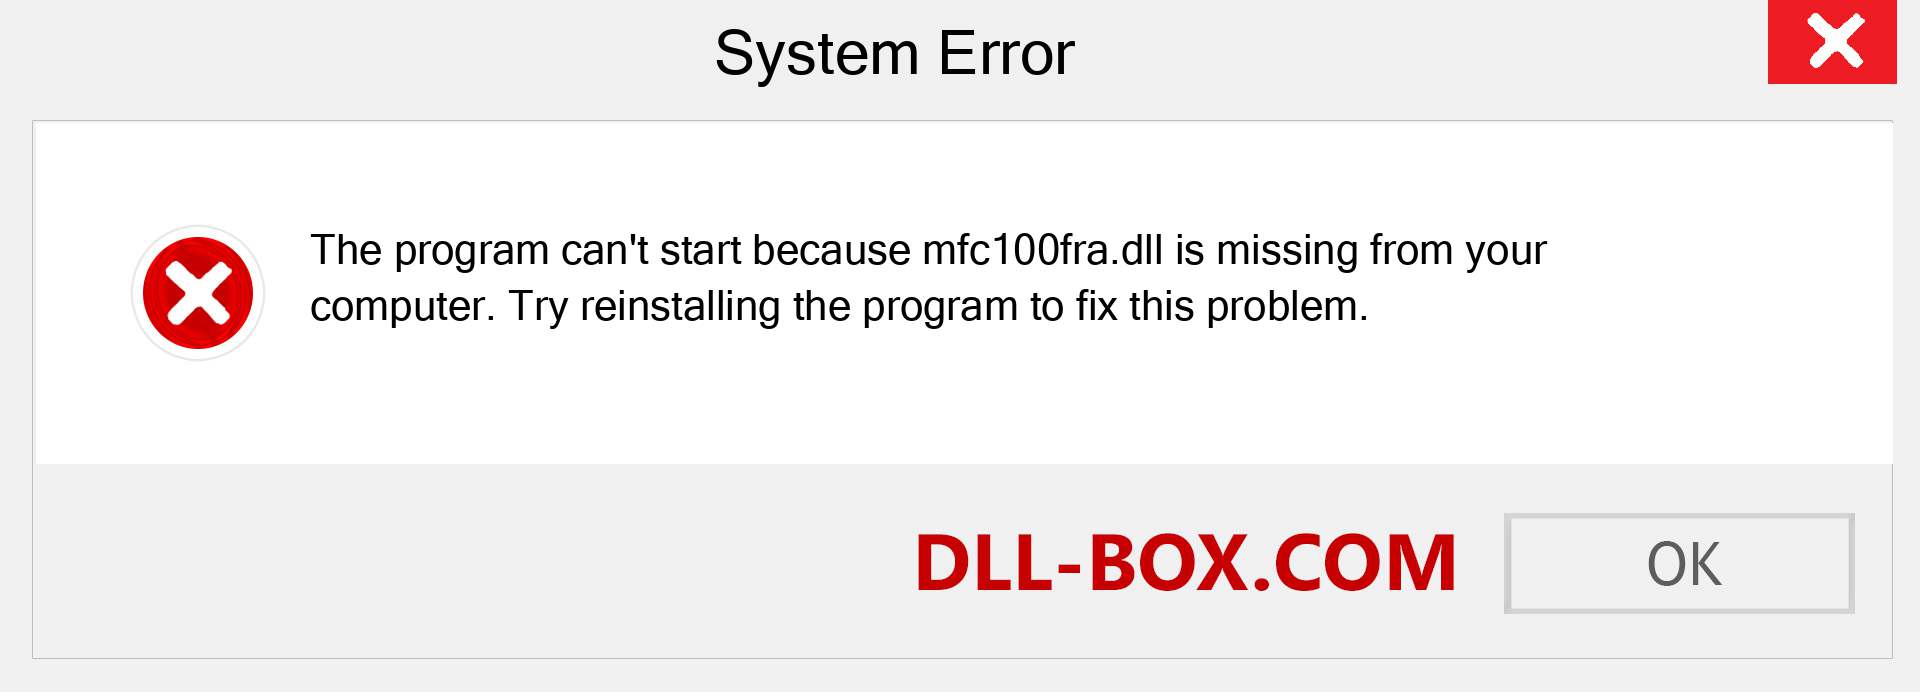  mfc100fra.dll file is missing?. Download for Windows 7, 8, 10 - Fix  mfc100fra dll Missing Error on Windows, photos, images